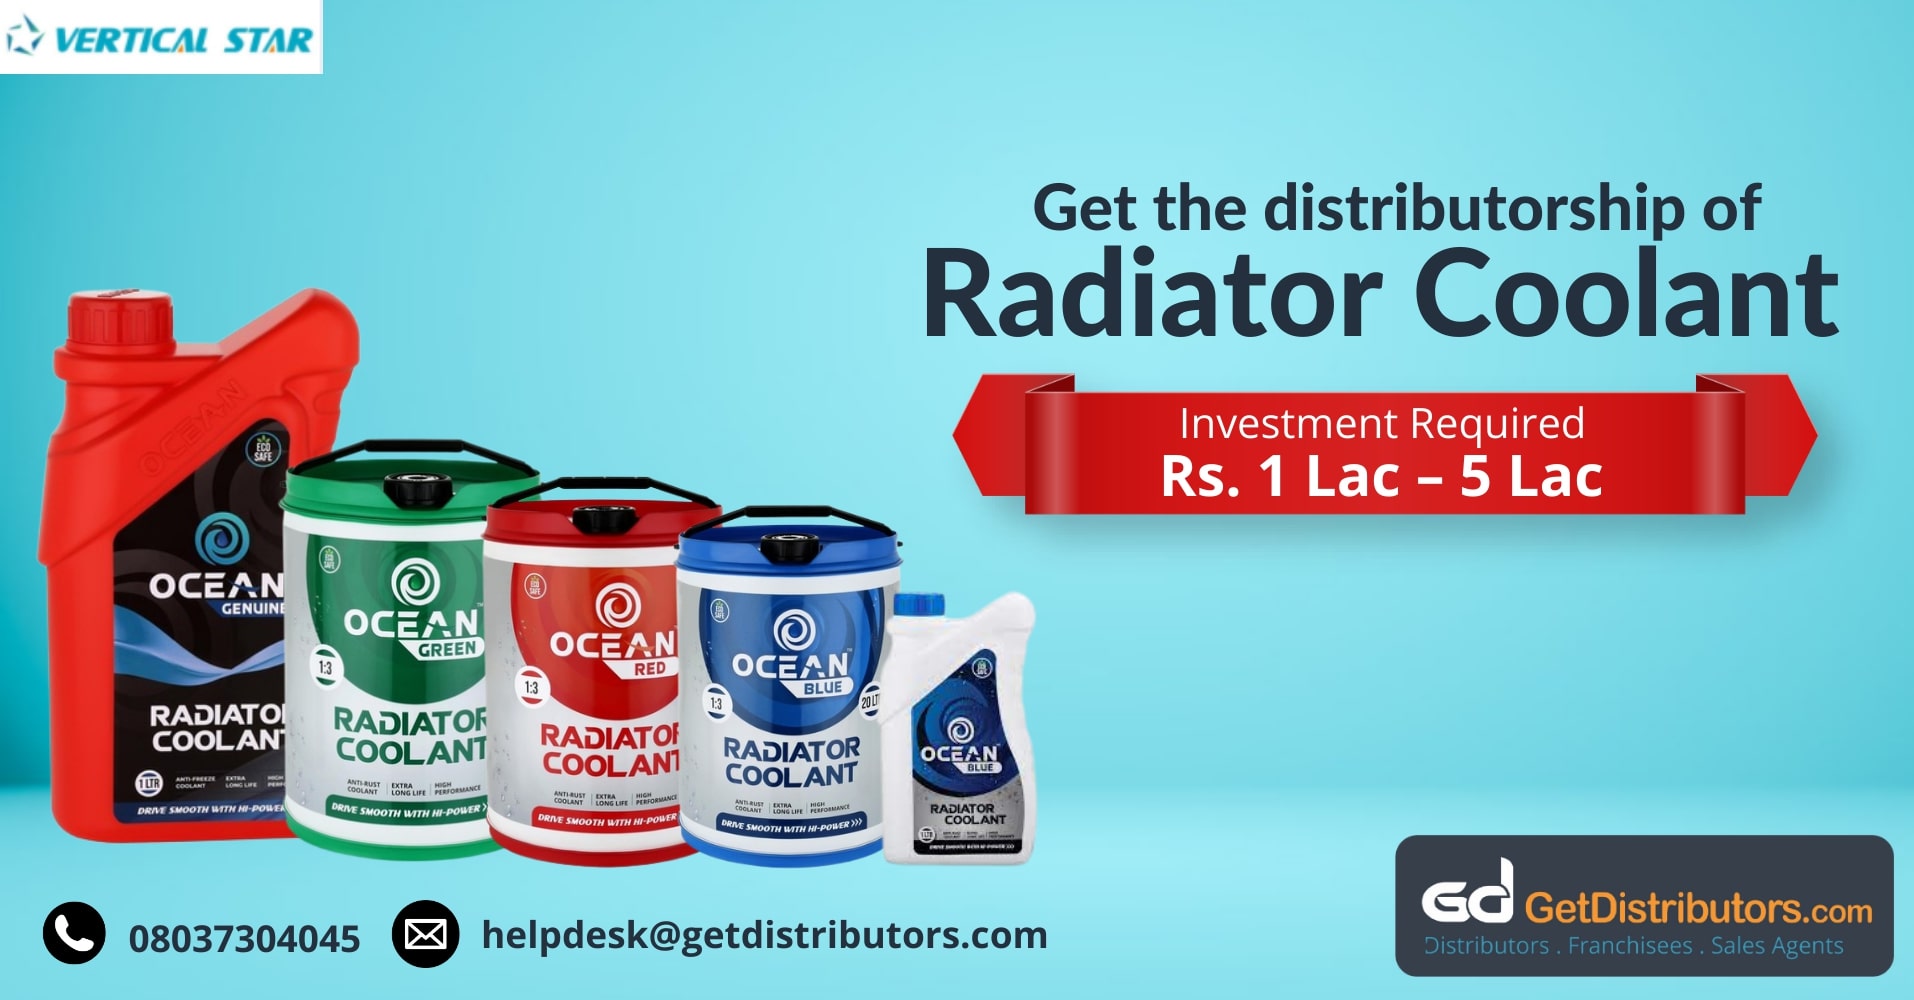 Premium radiant coolant for distribution